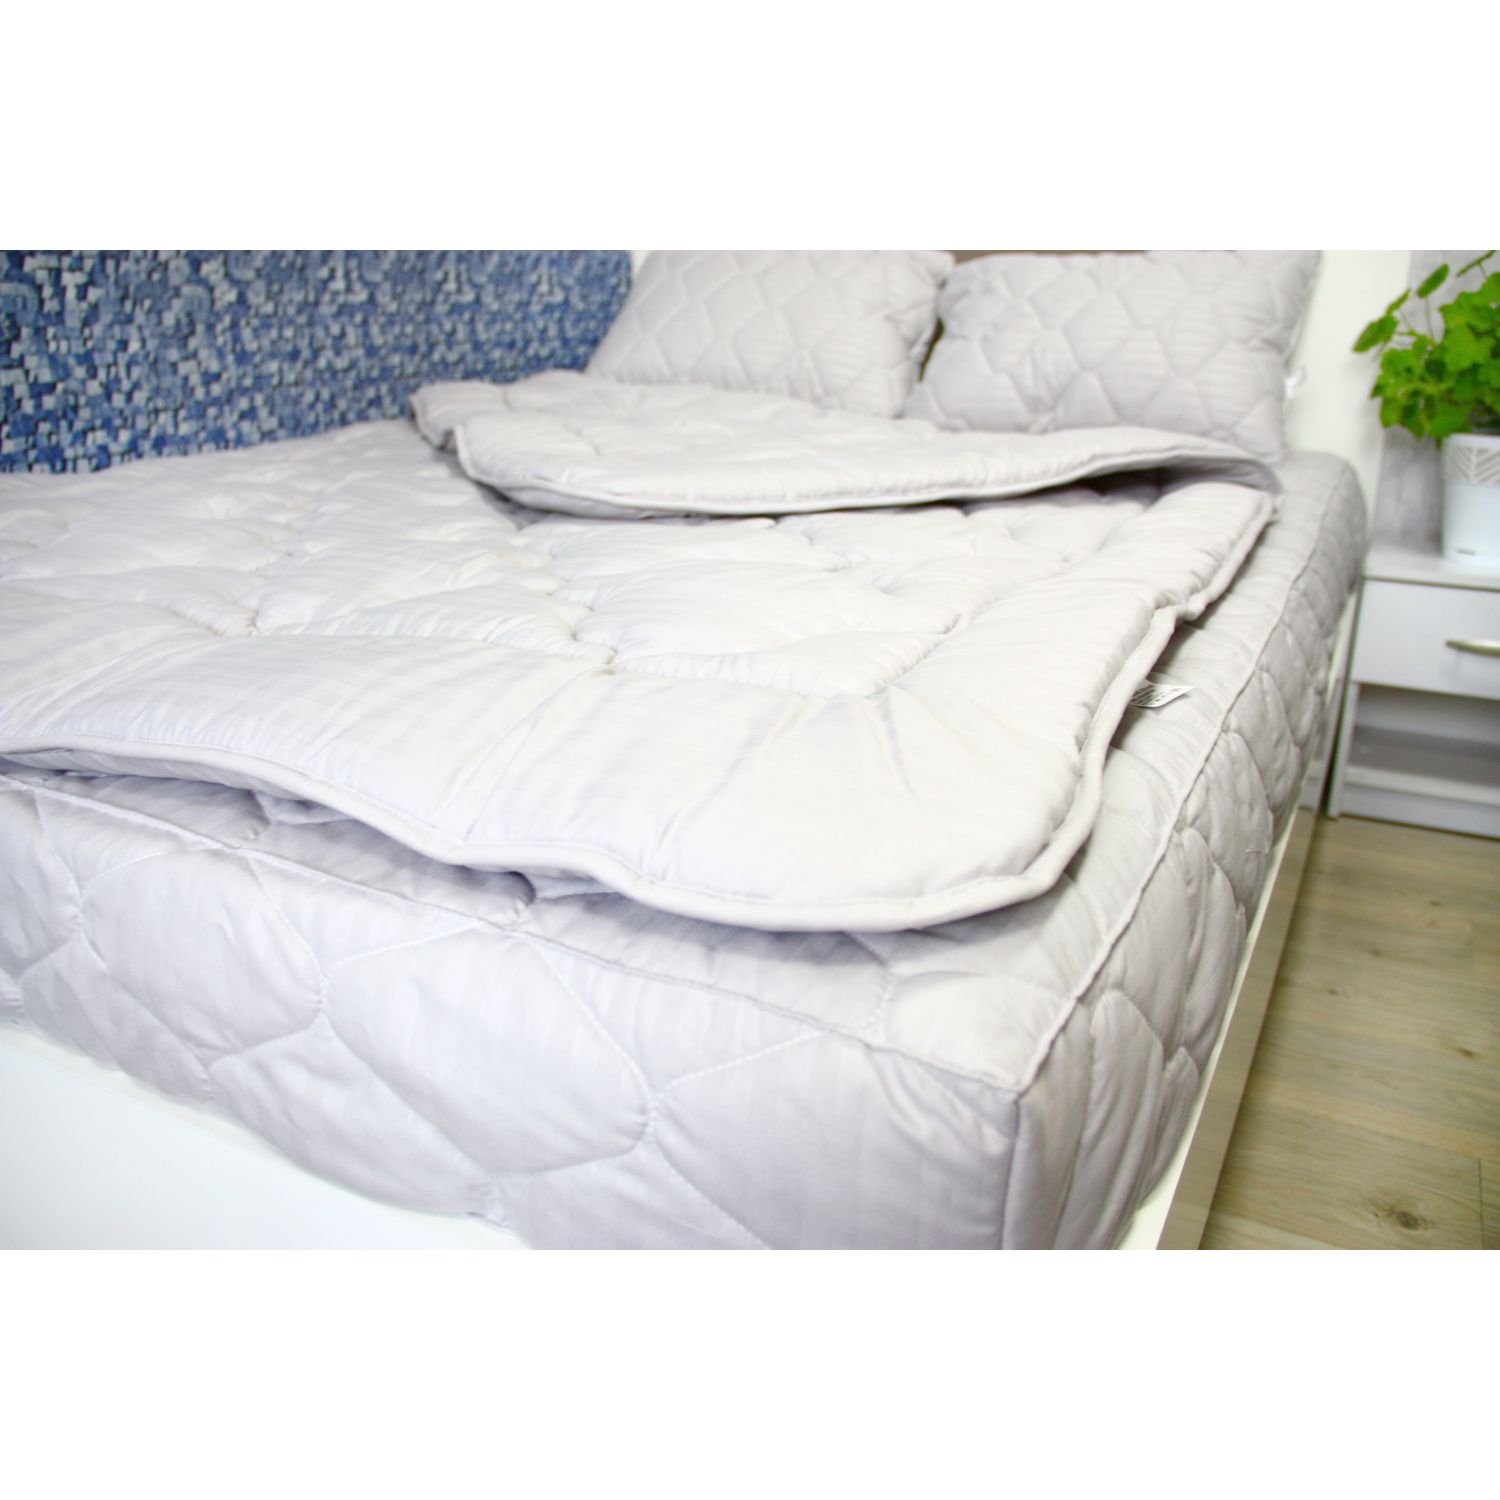 Одеяло LightHouse Soft Line Mf Stripe grey, 140х210 см, серое (602244) - фото 4